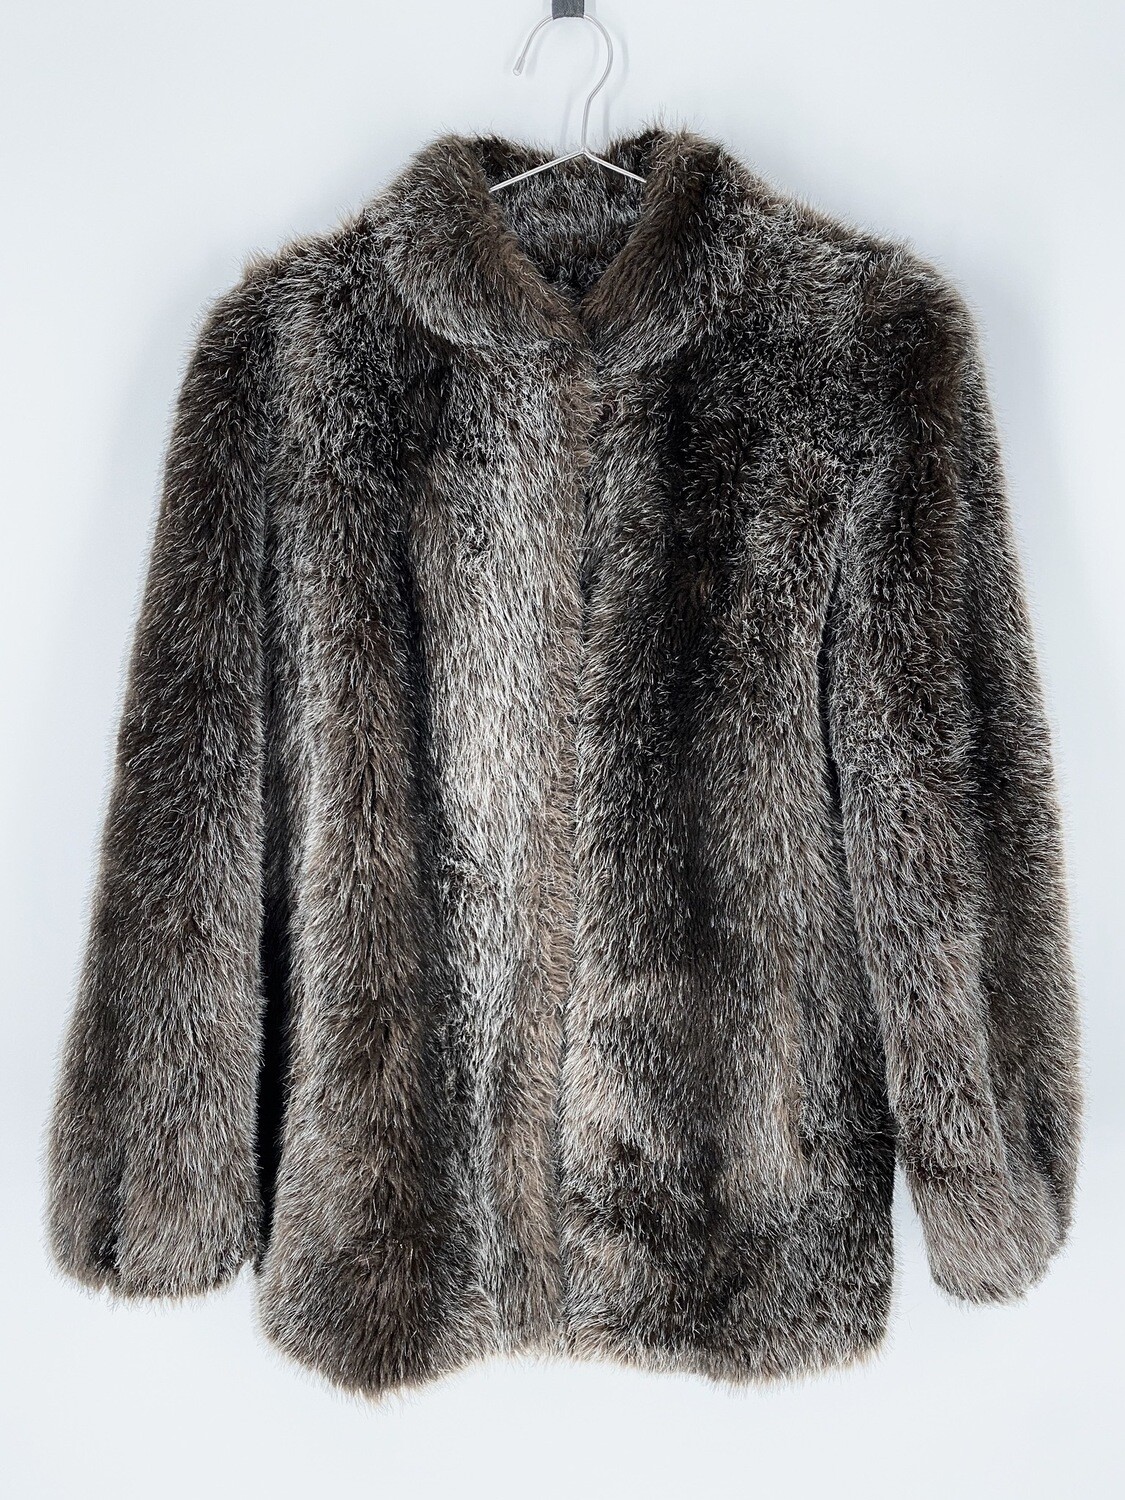 Hilmoor New York Faux Fur Jacket Size S